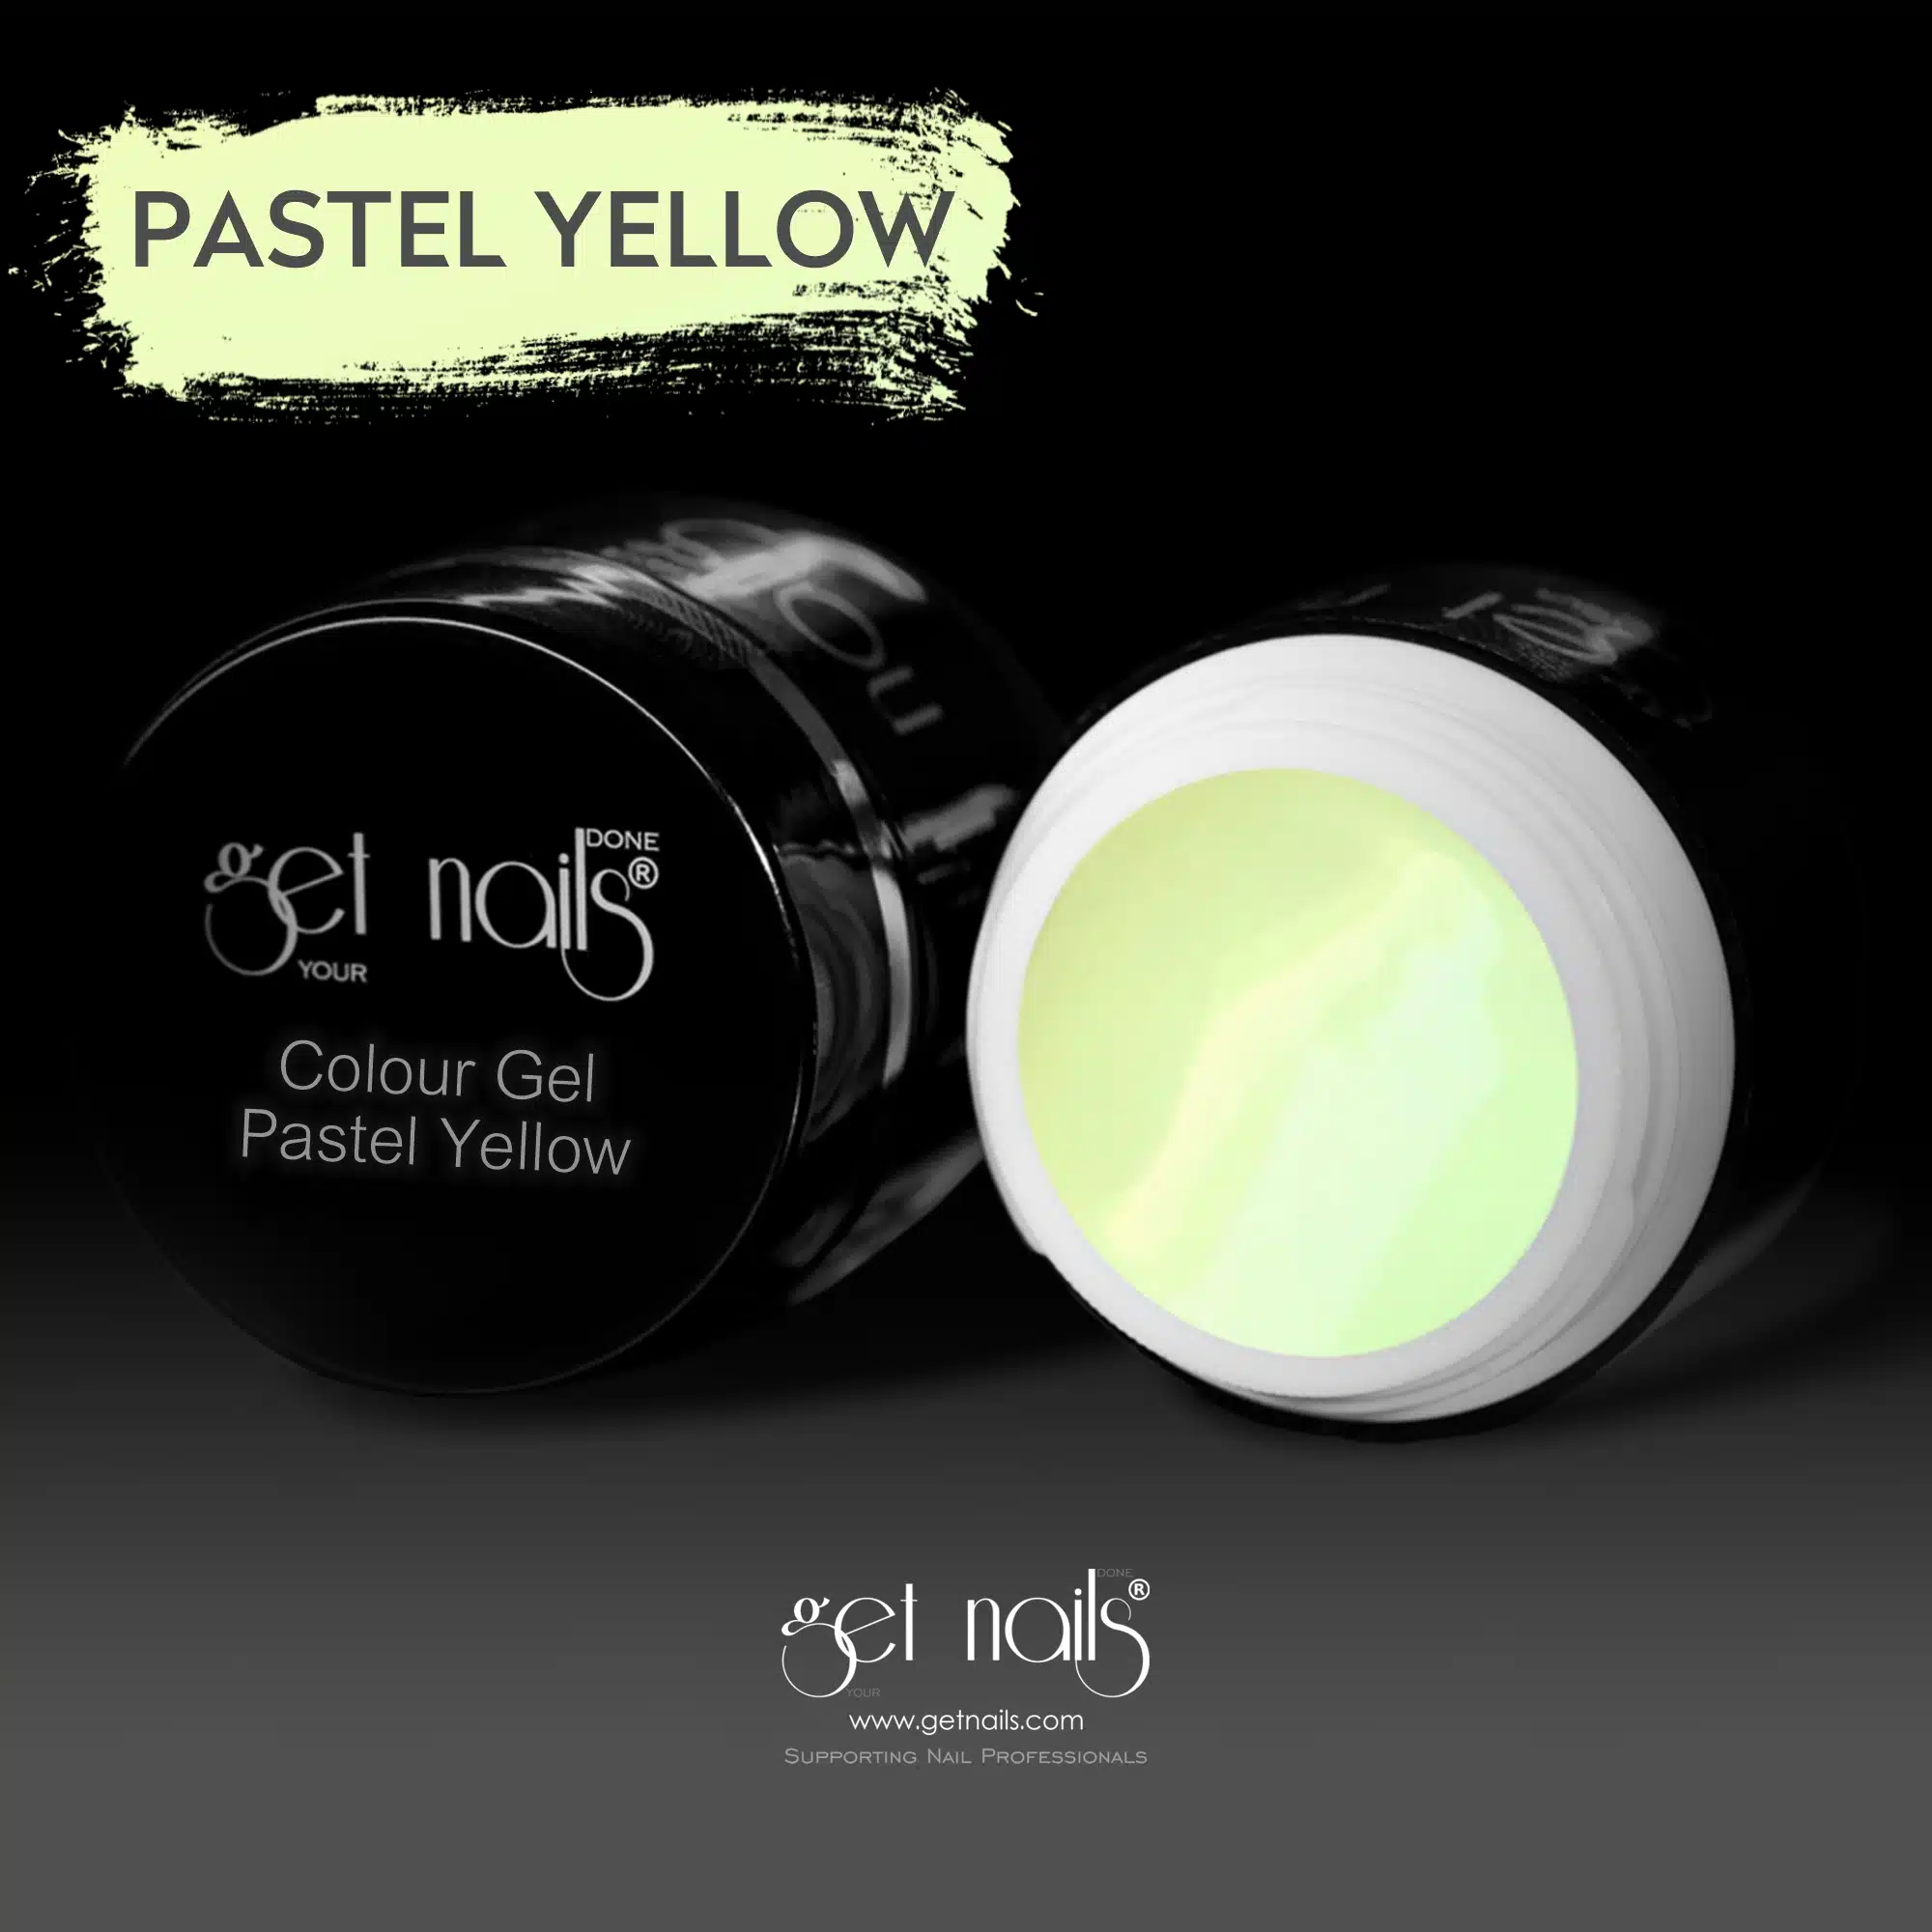 Get Nails Austria - Gel colorato Pastel Yellow 5g